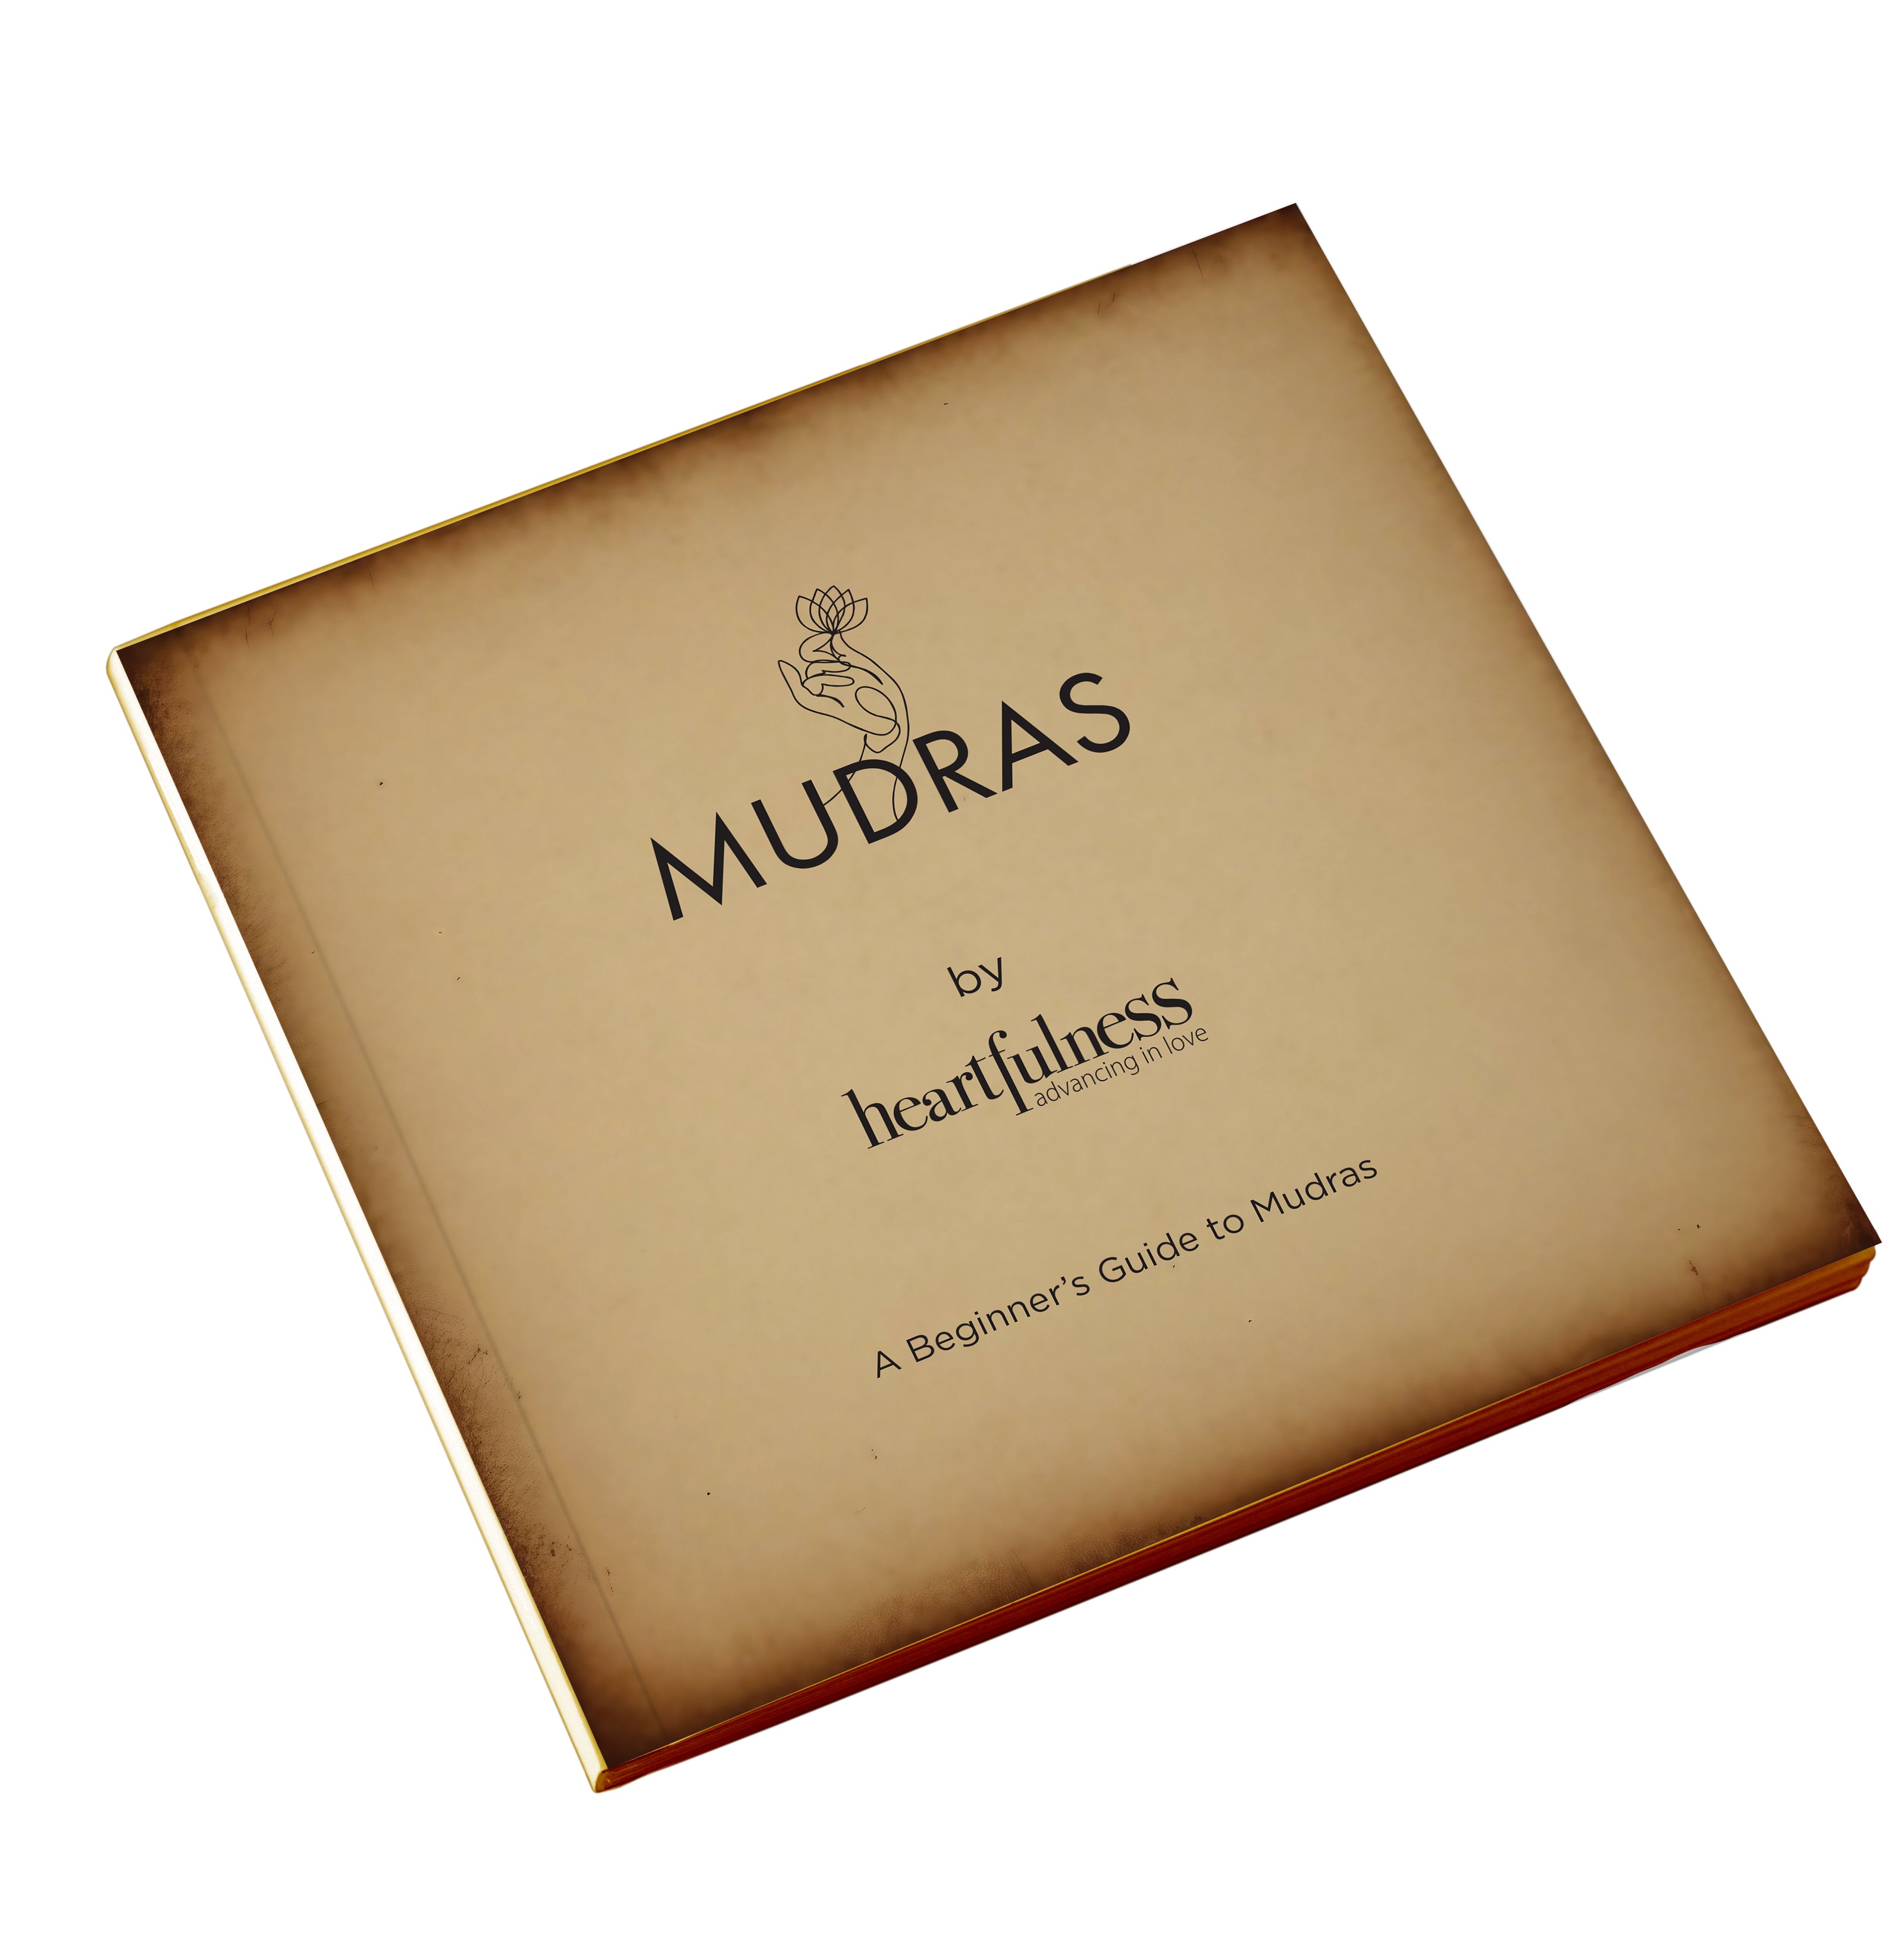 Mudras by Heartfulness(English)